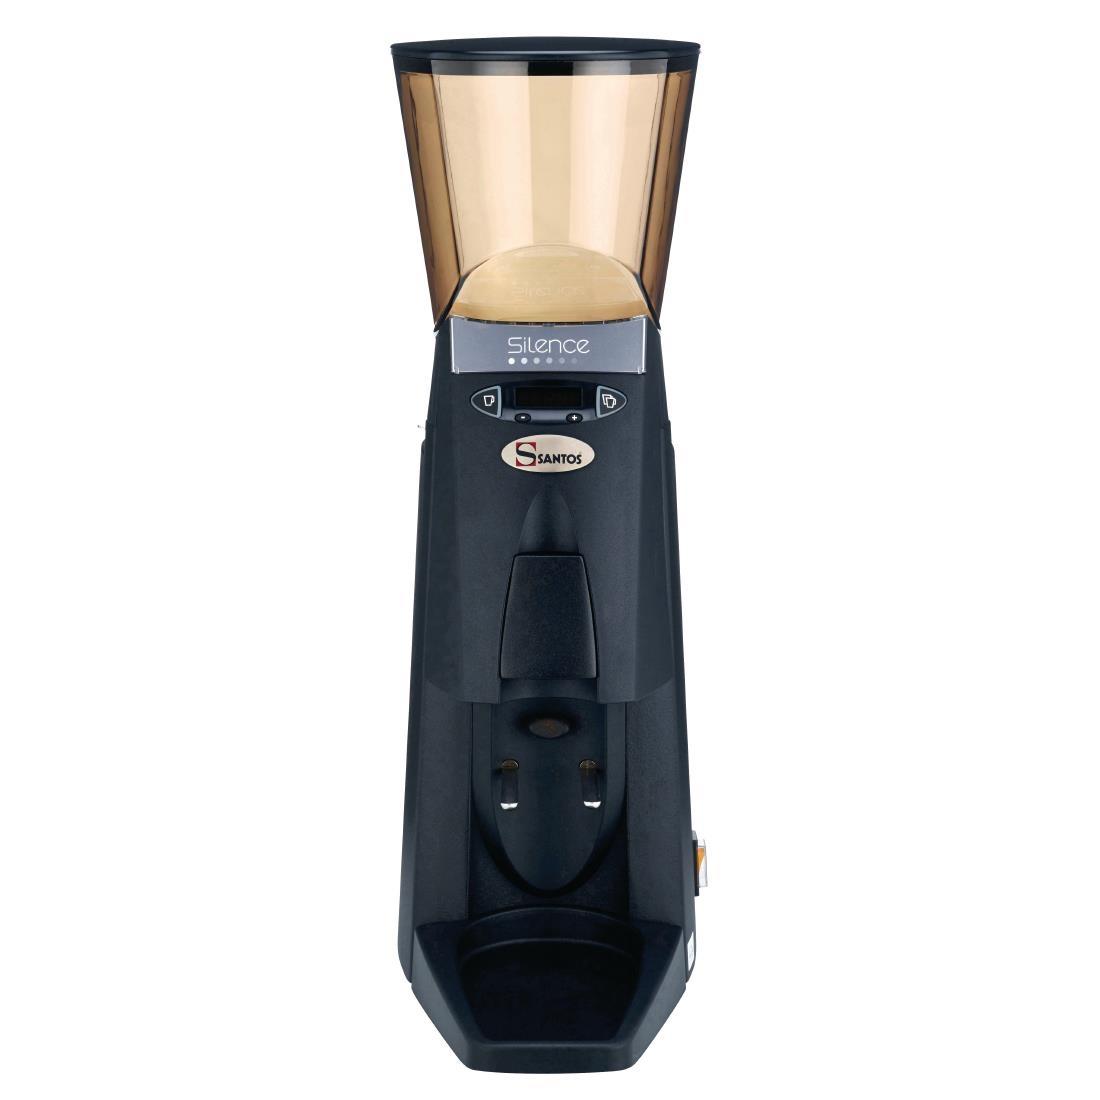 Santos Coffee Grinder 55BFA - CF601  - 2